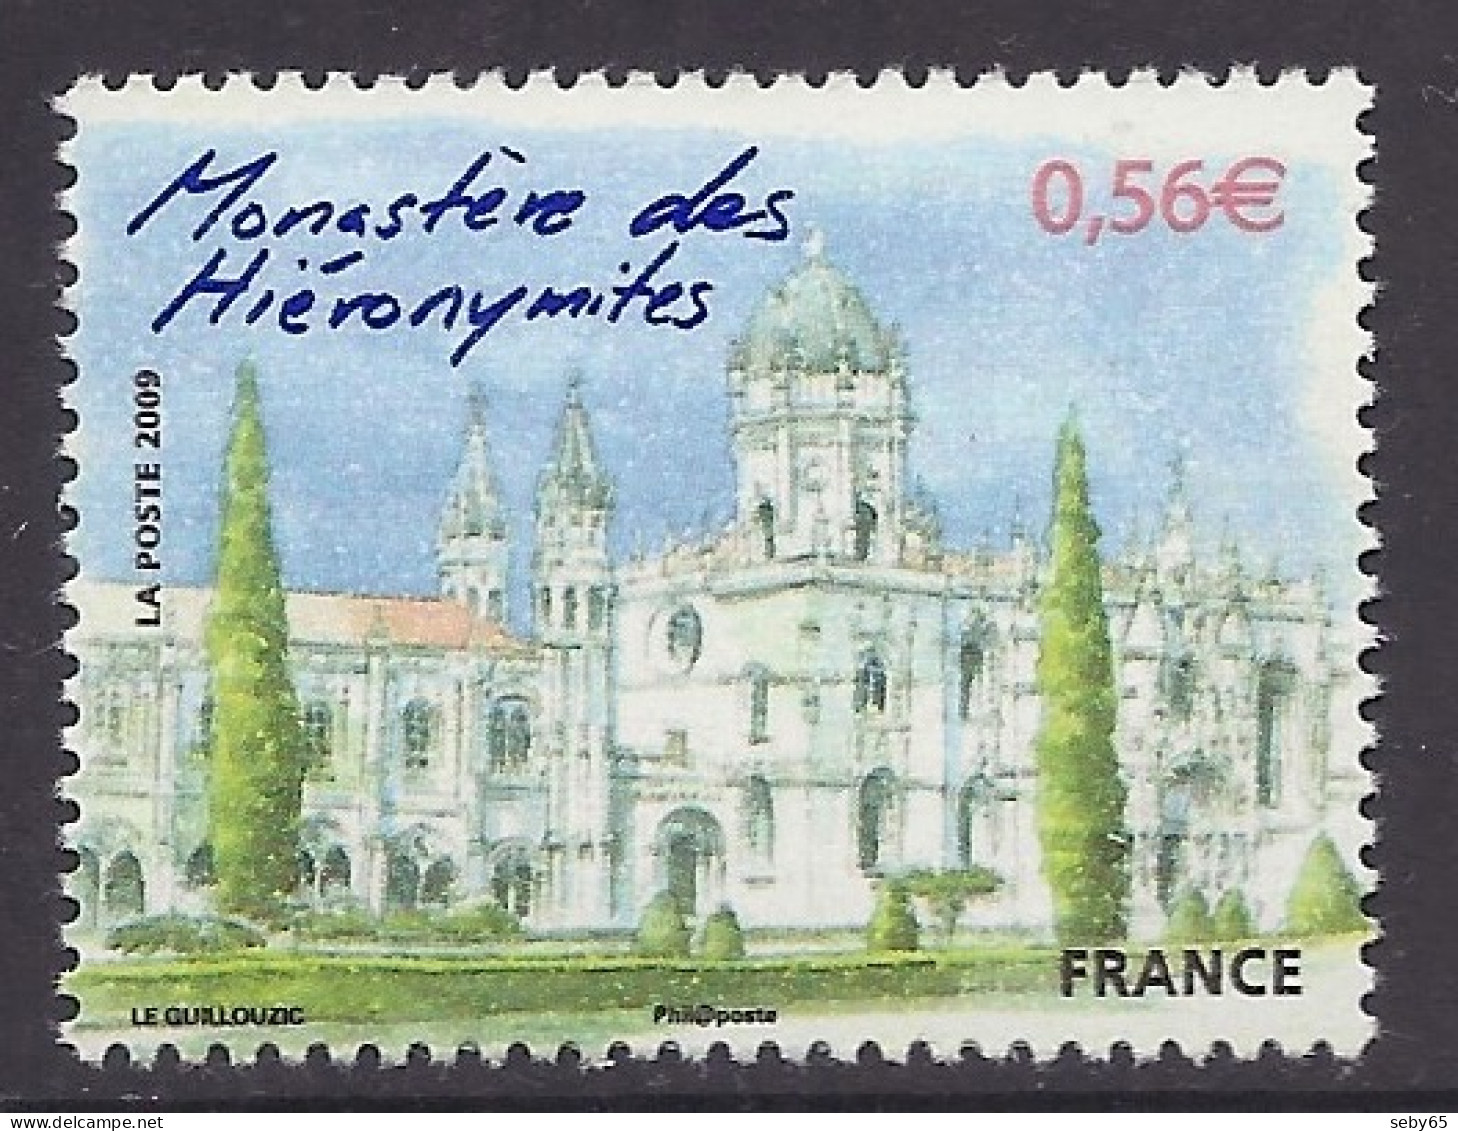 France 2009 - Capitales Européennes, Lisbonne, Lisboa, Lisbona, European Capitals, Monastery Of Hieronymites - MNH - Nuovi